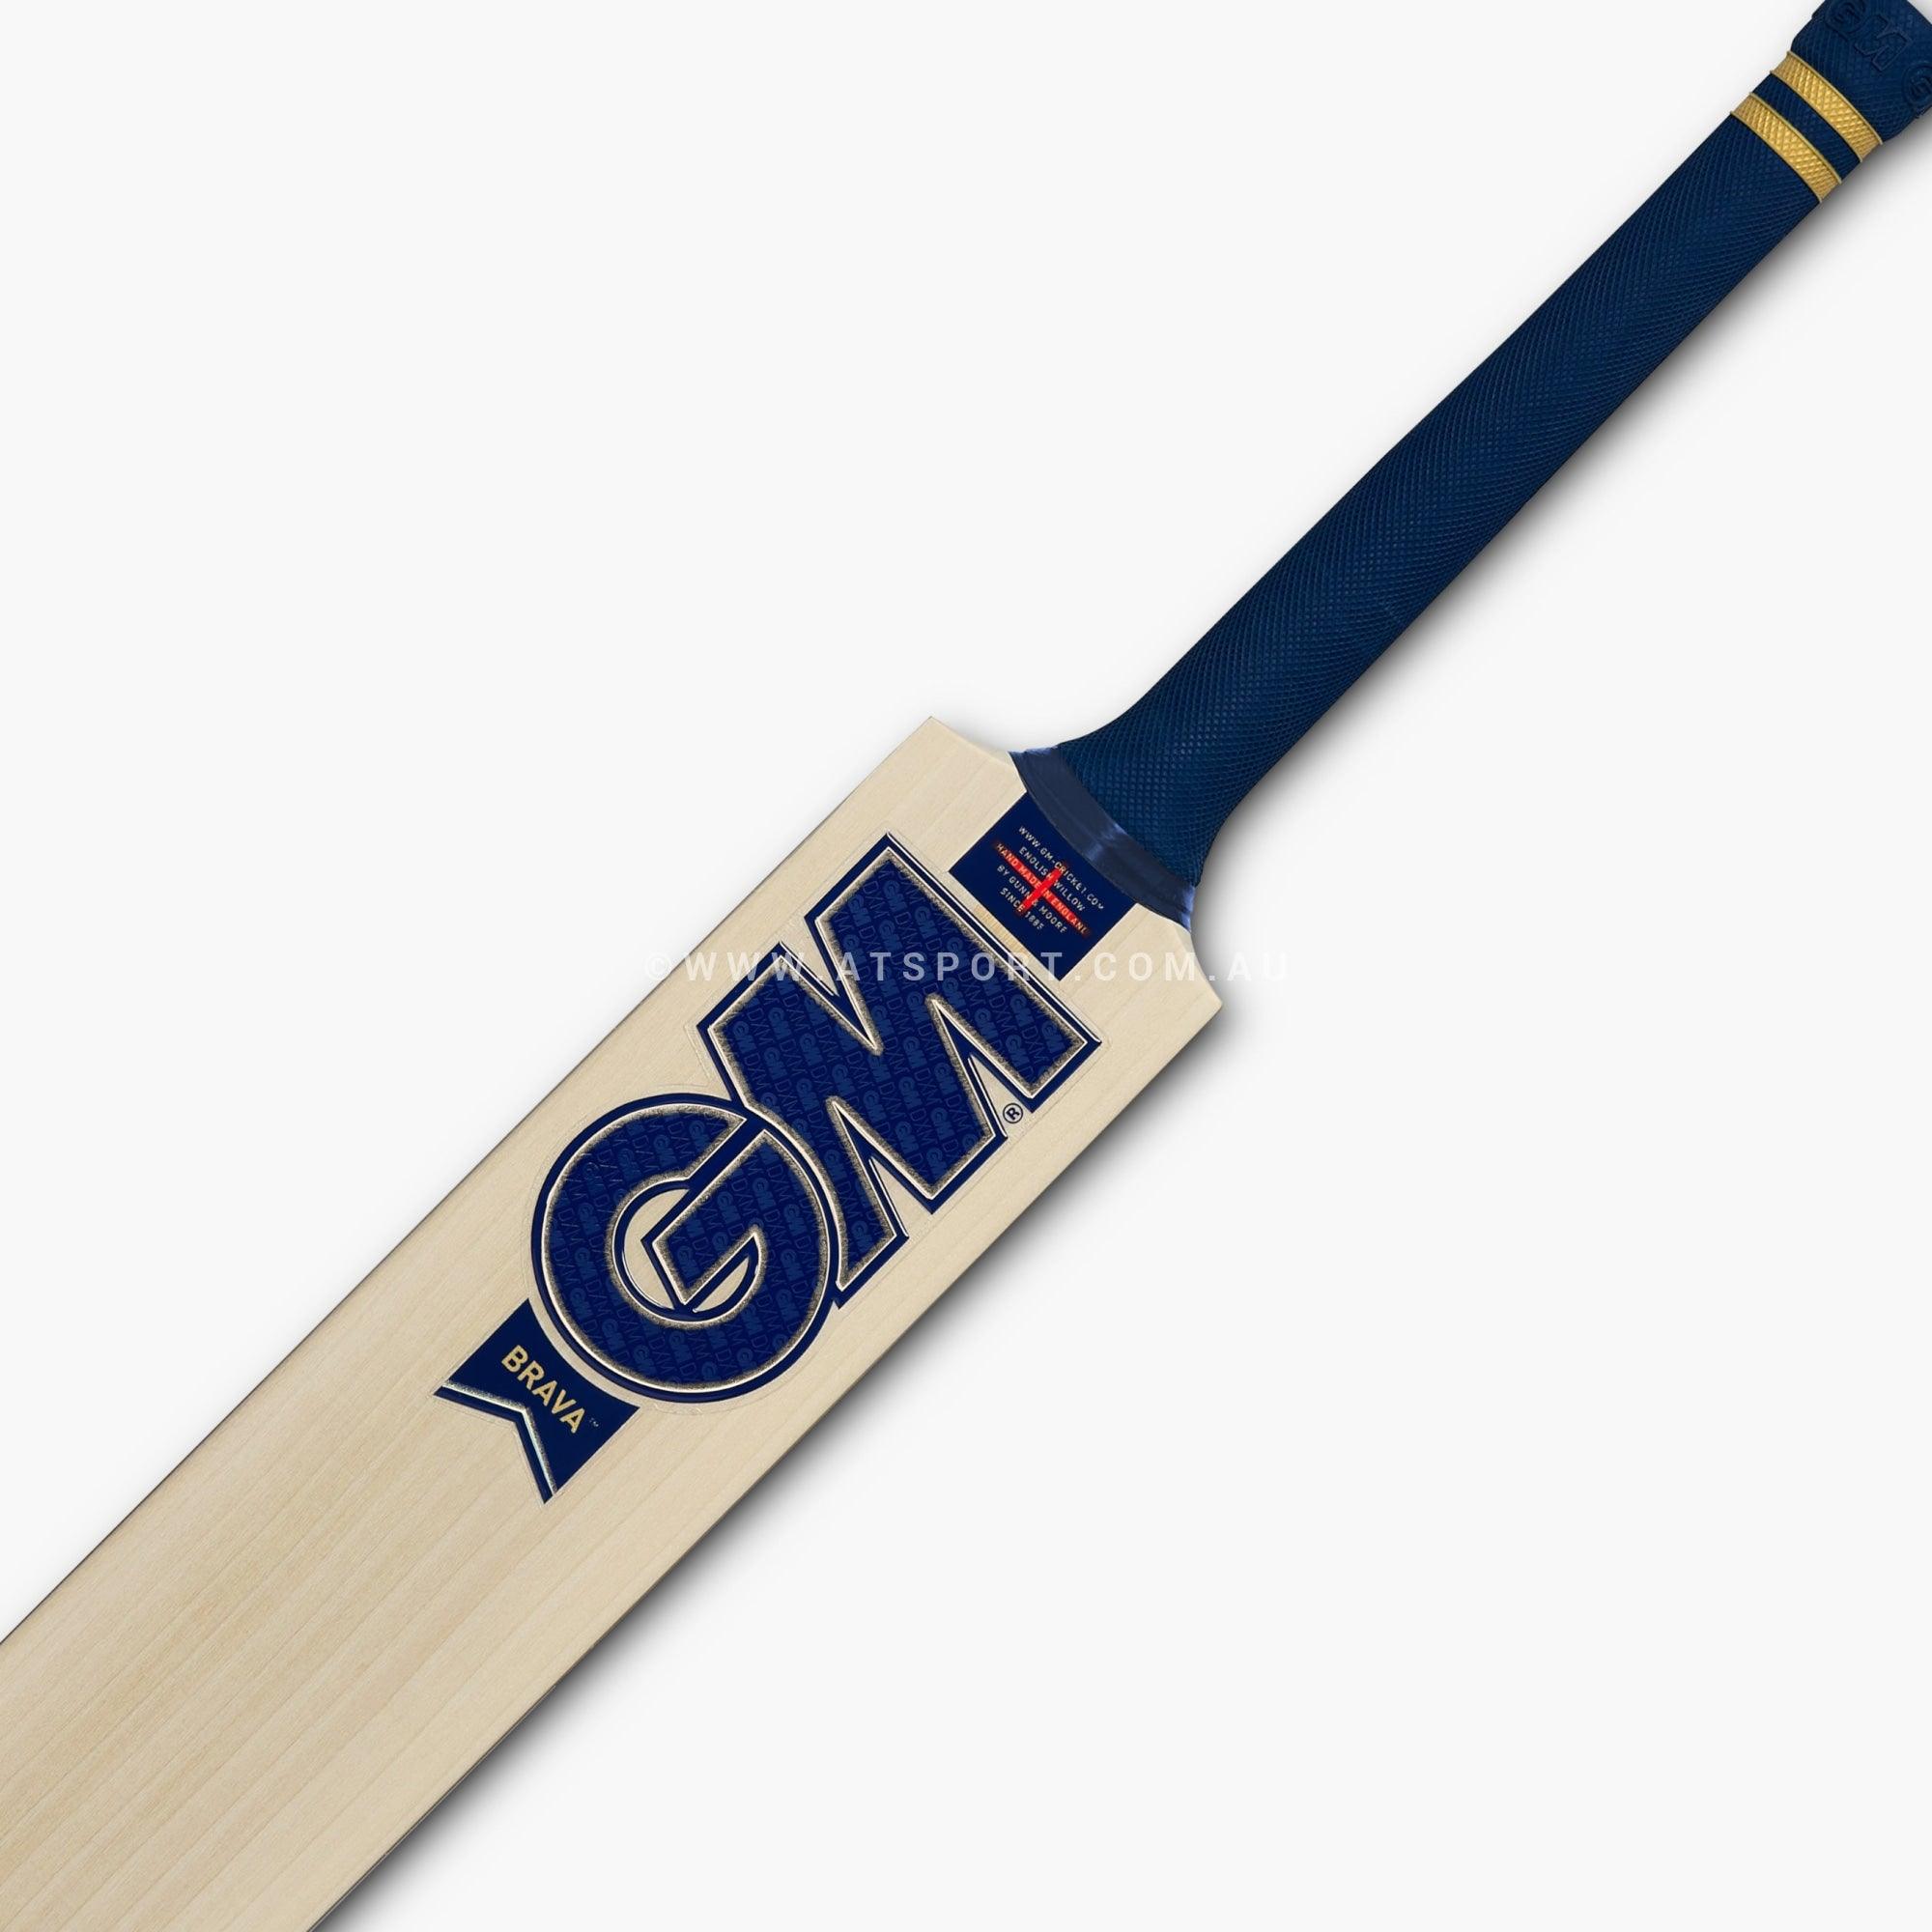 Gm Brava Limited Edition Dxm Ttnow L555 English Willow Cricket Bat - Sh Grade 1